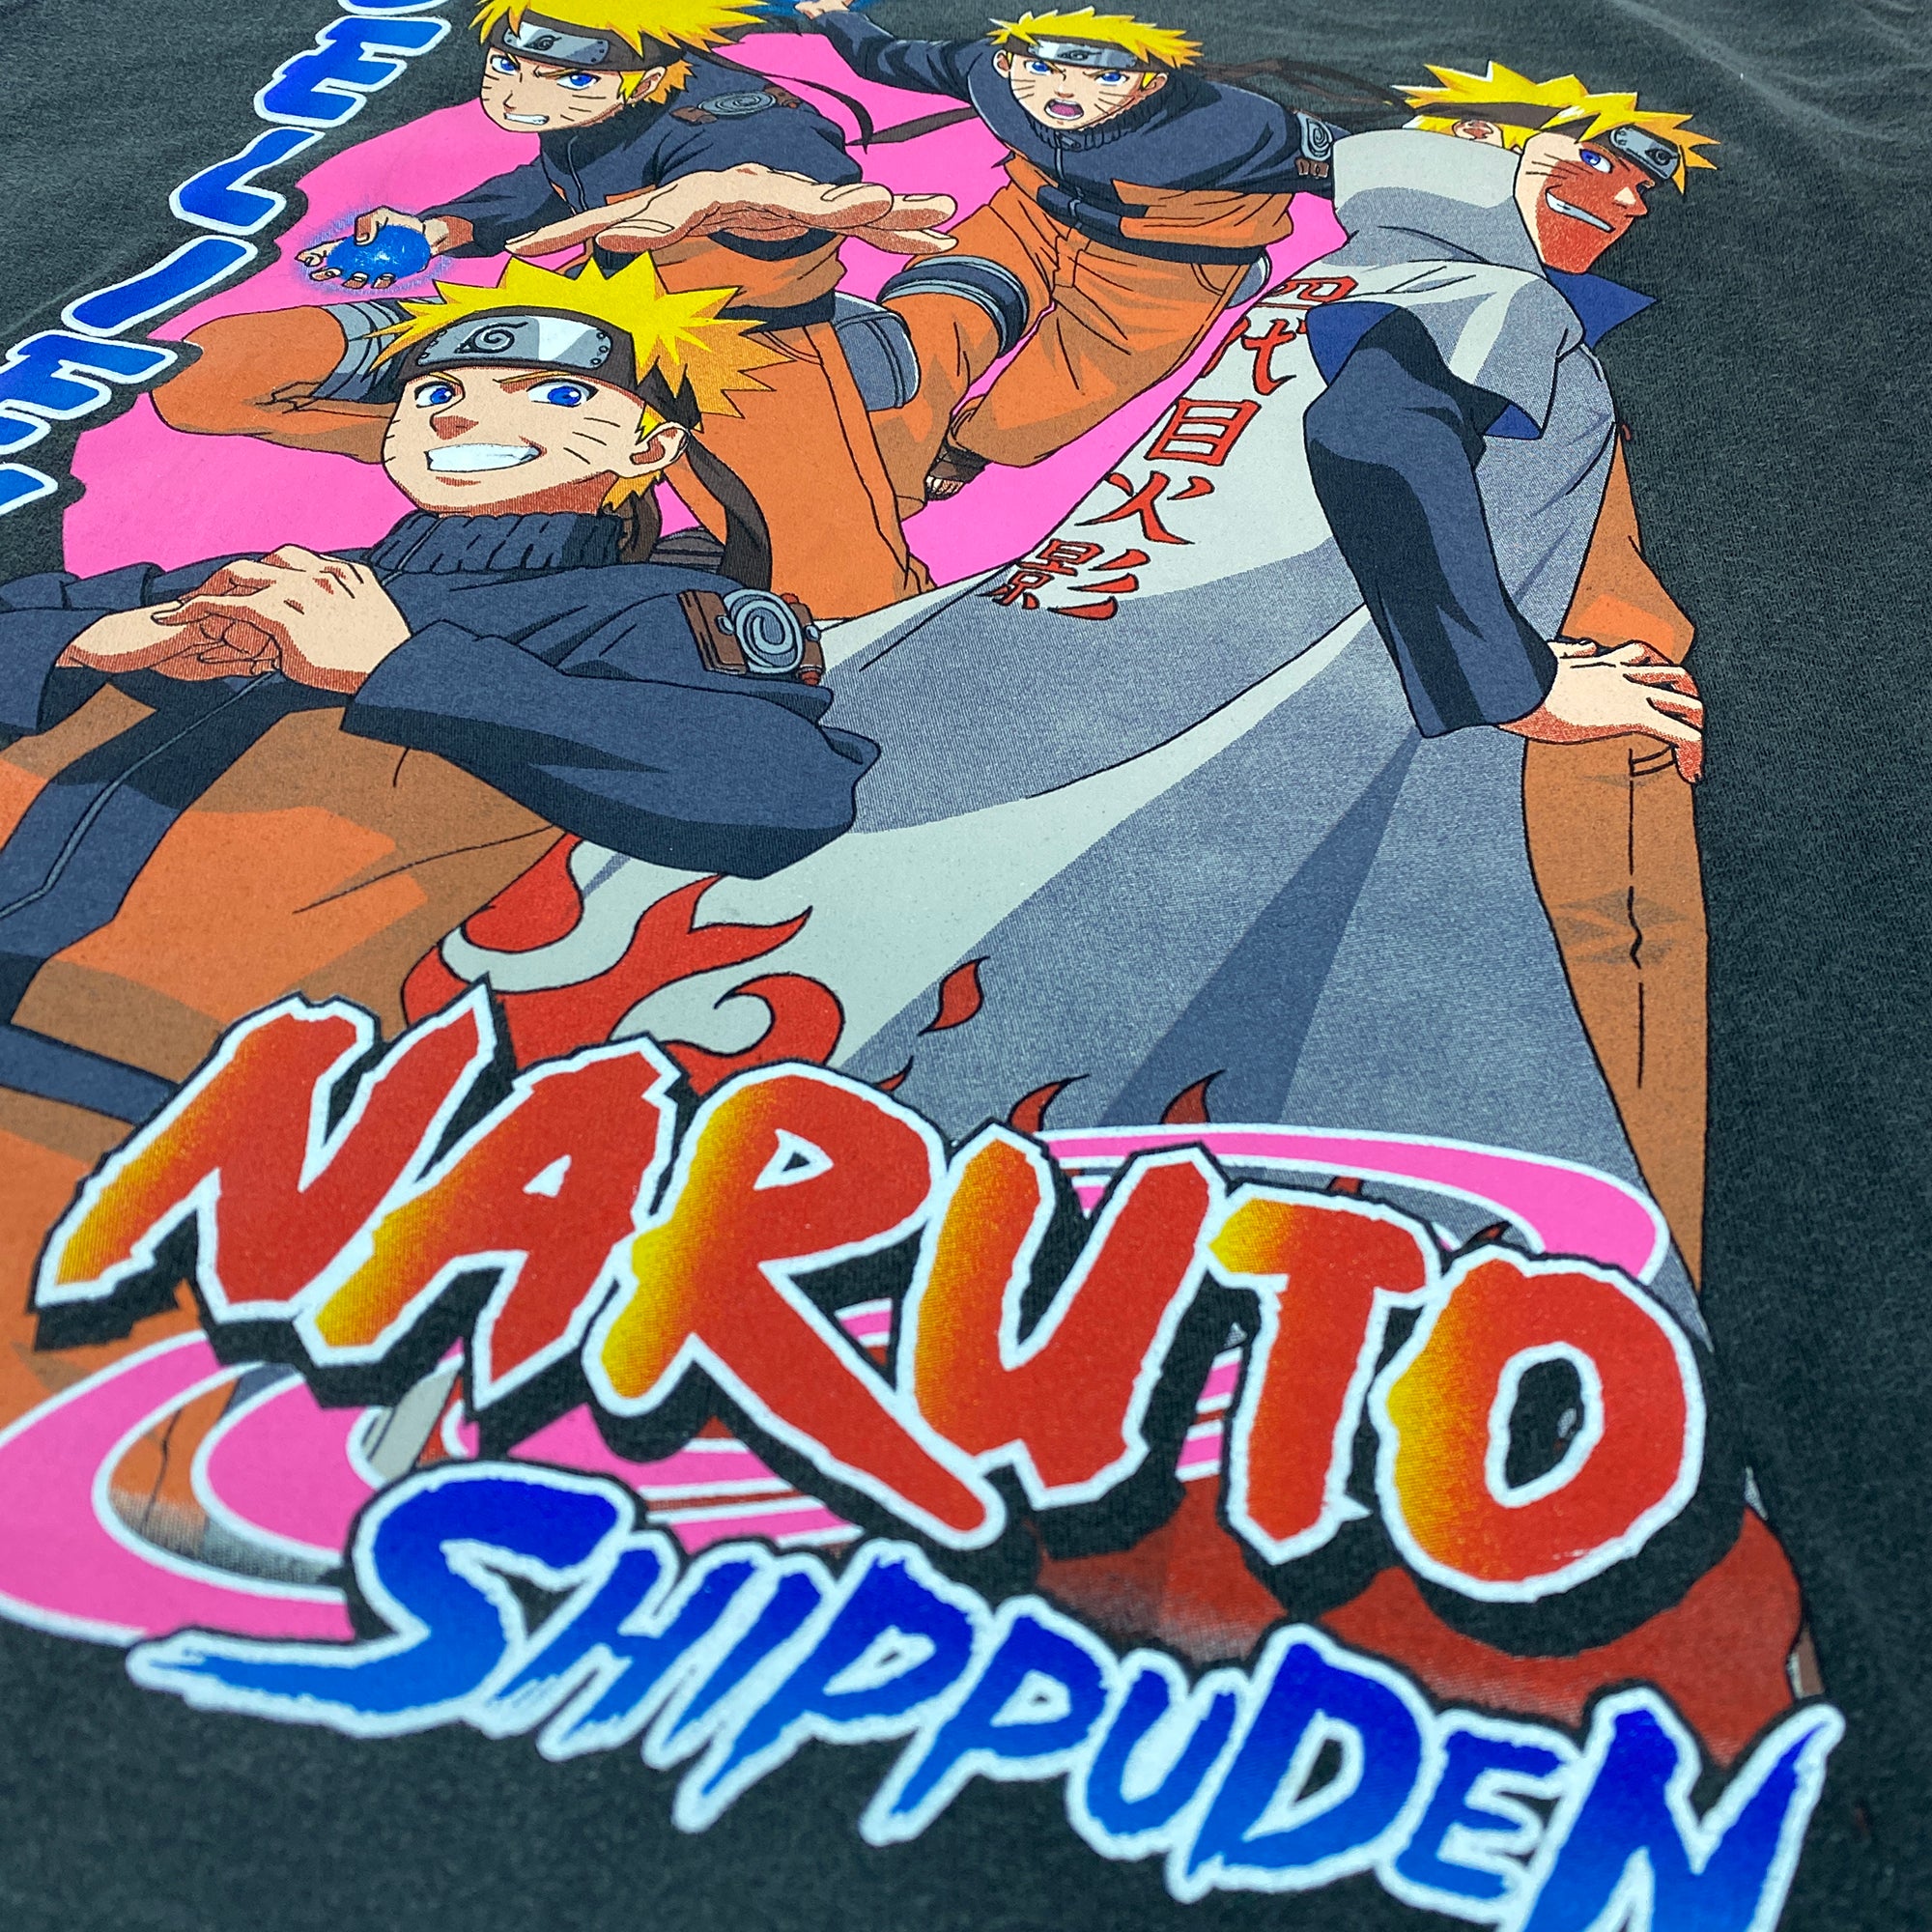 Naruto Shippuden - Believe It T-Shirt - Crunchyroll Exclusive ...